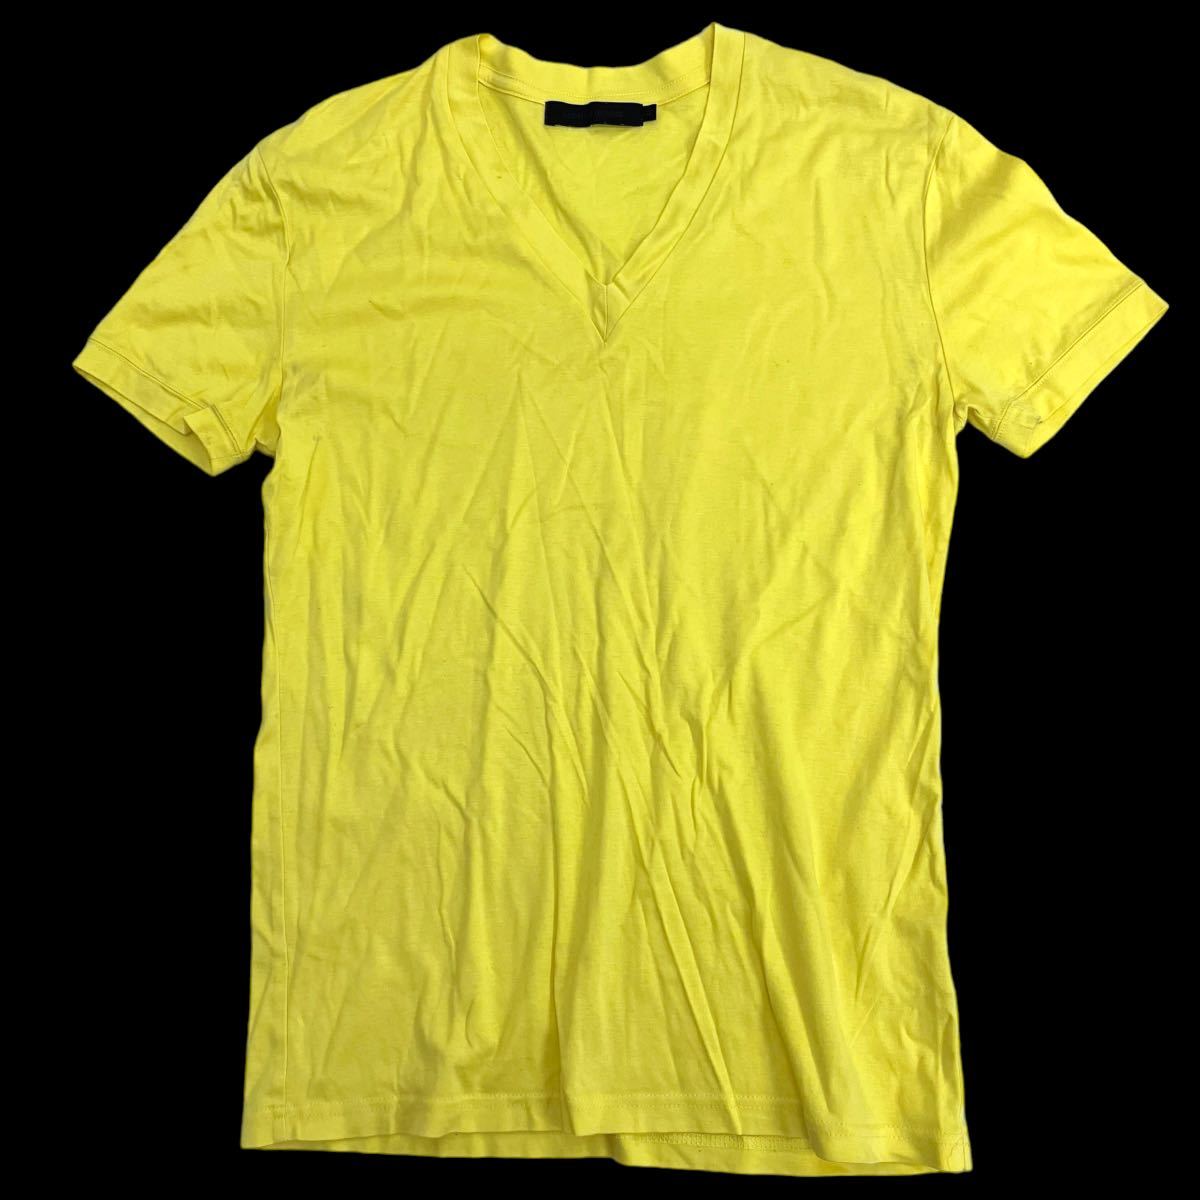 LITHIUM HOMME / リチウムオム メンズ カットソー Vネック 半袖Tシャツ イエロー 46サイズ Sサイズ相当 O-1444_画像1